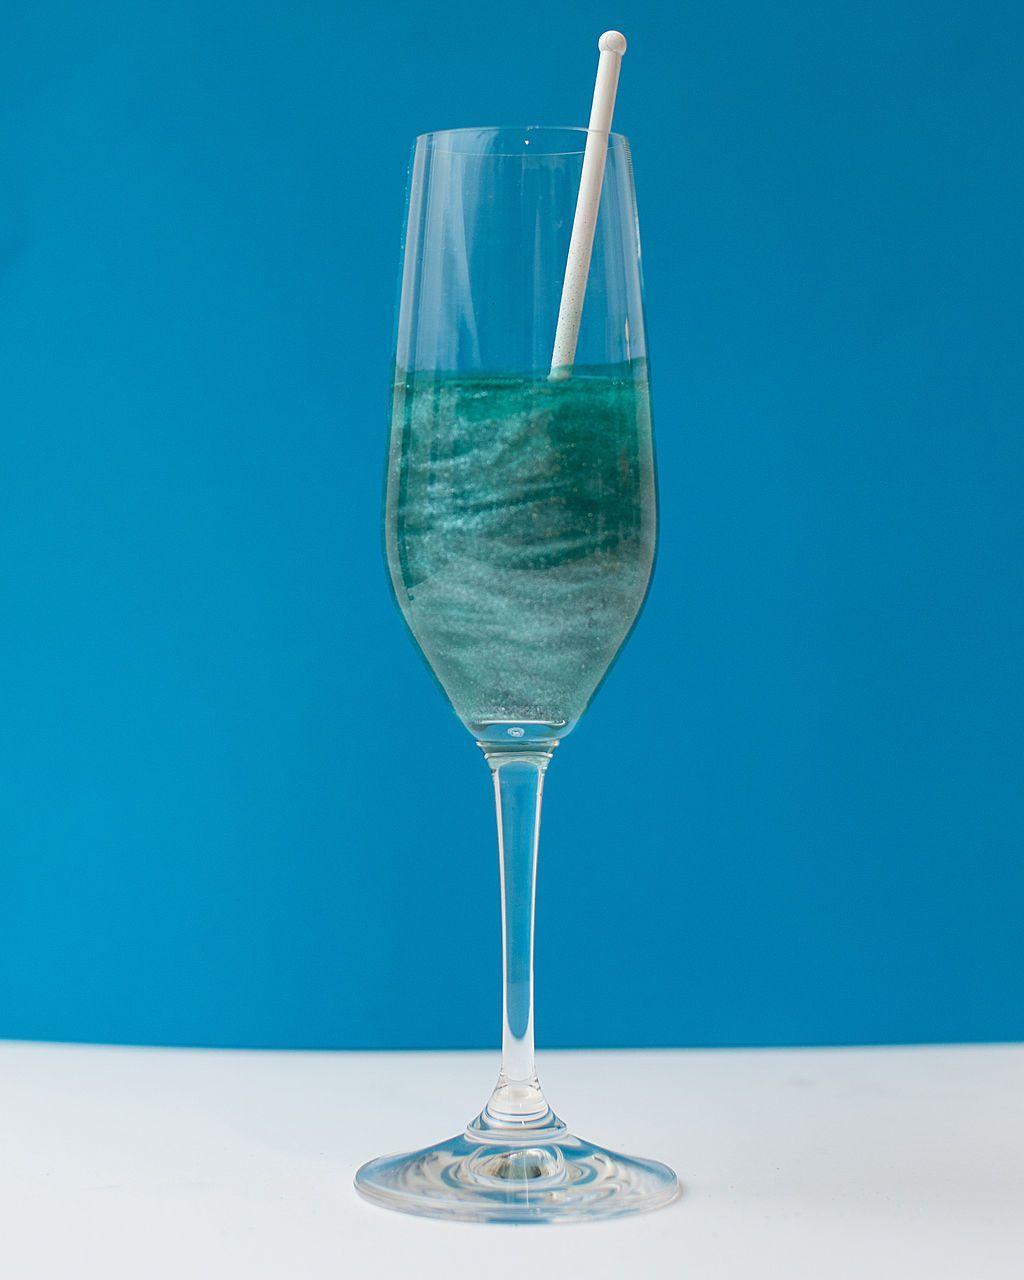 Sugar Mama Shimmer Drink Glitter - Mermaid Water Teal